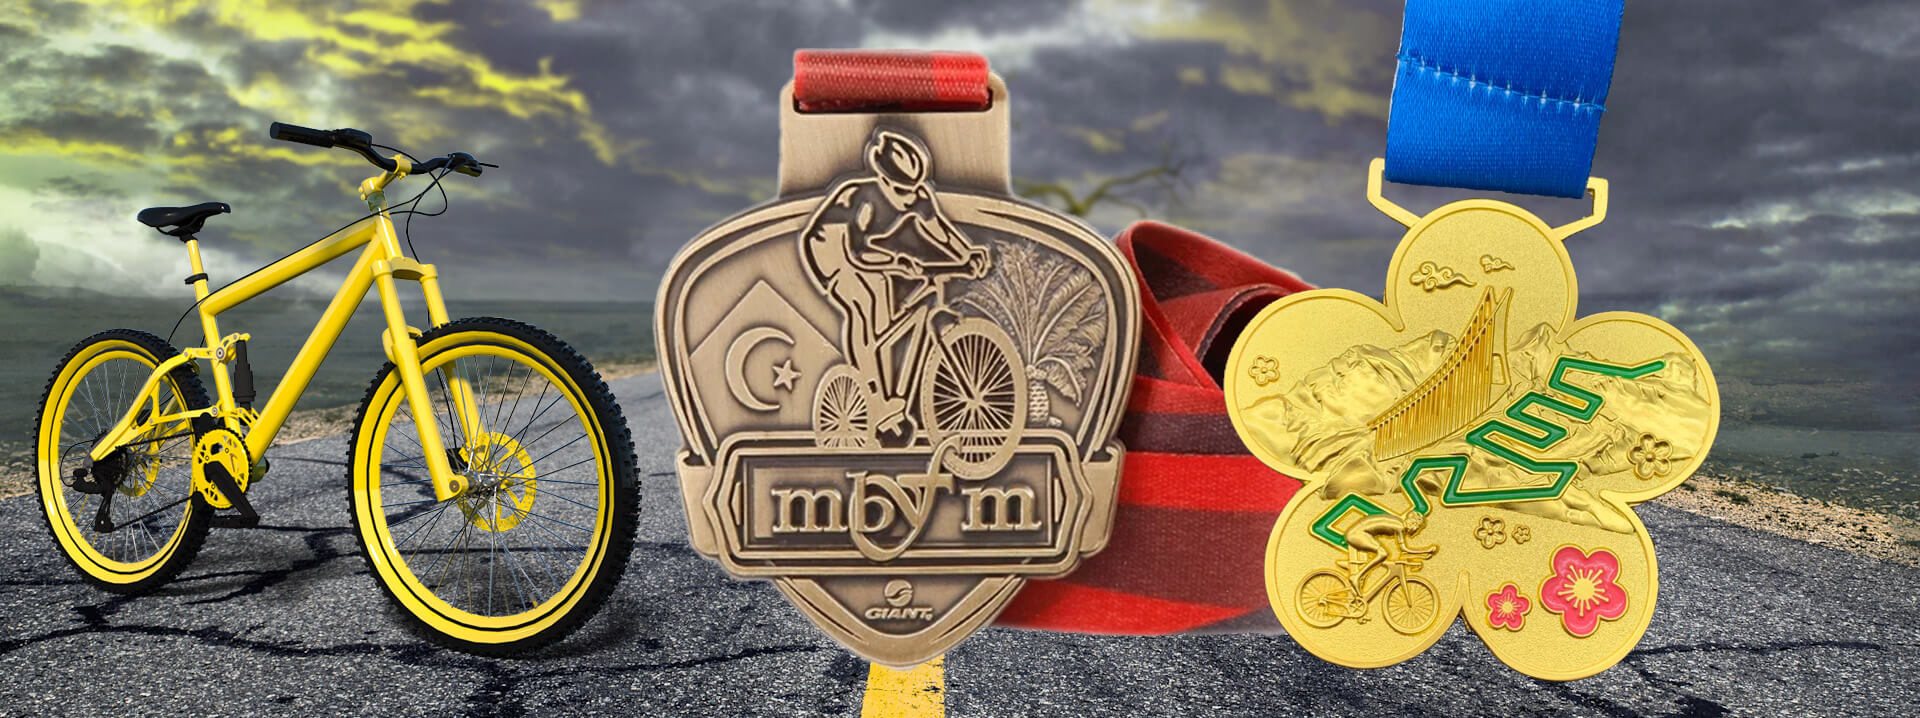 custom-cycling-medals